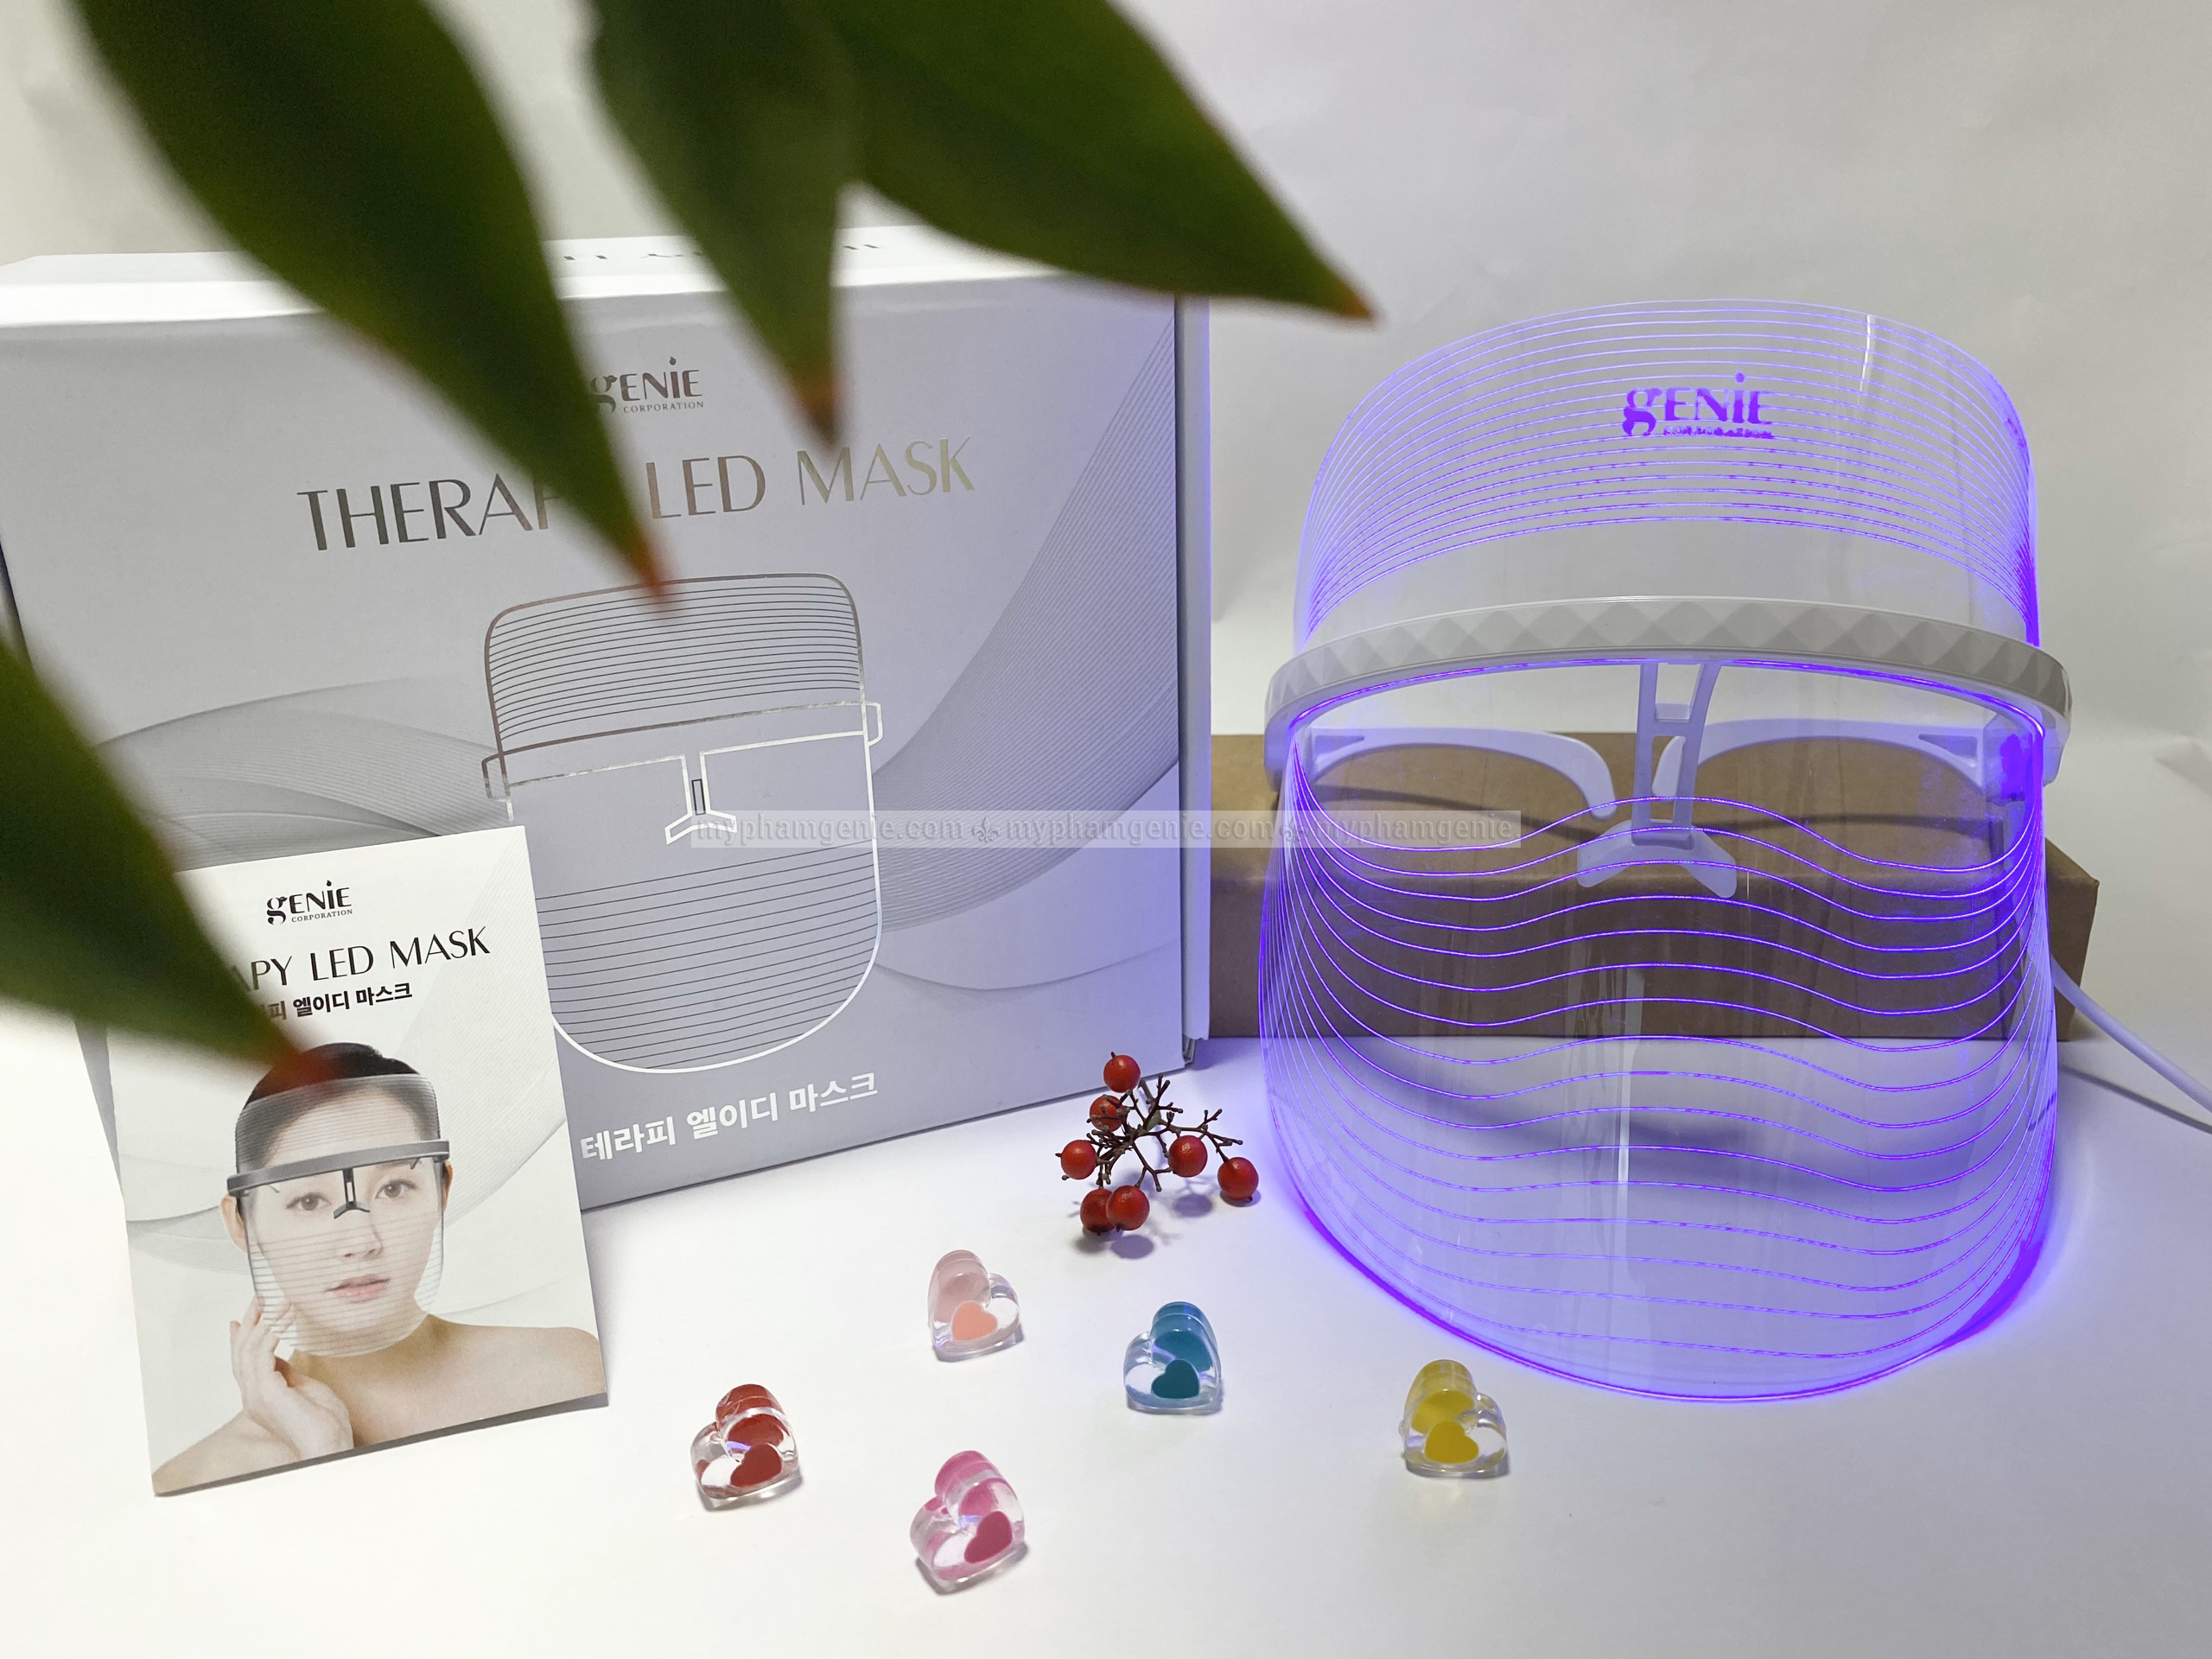 review mặt nạ ánh sáng sinh học genie | therapy led mask